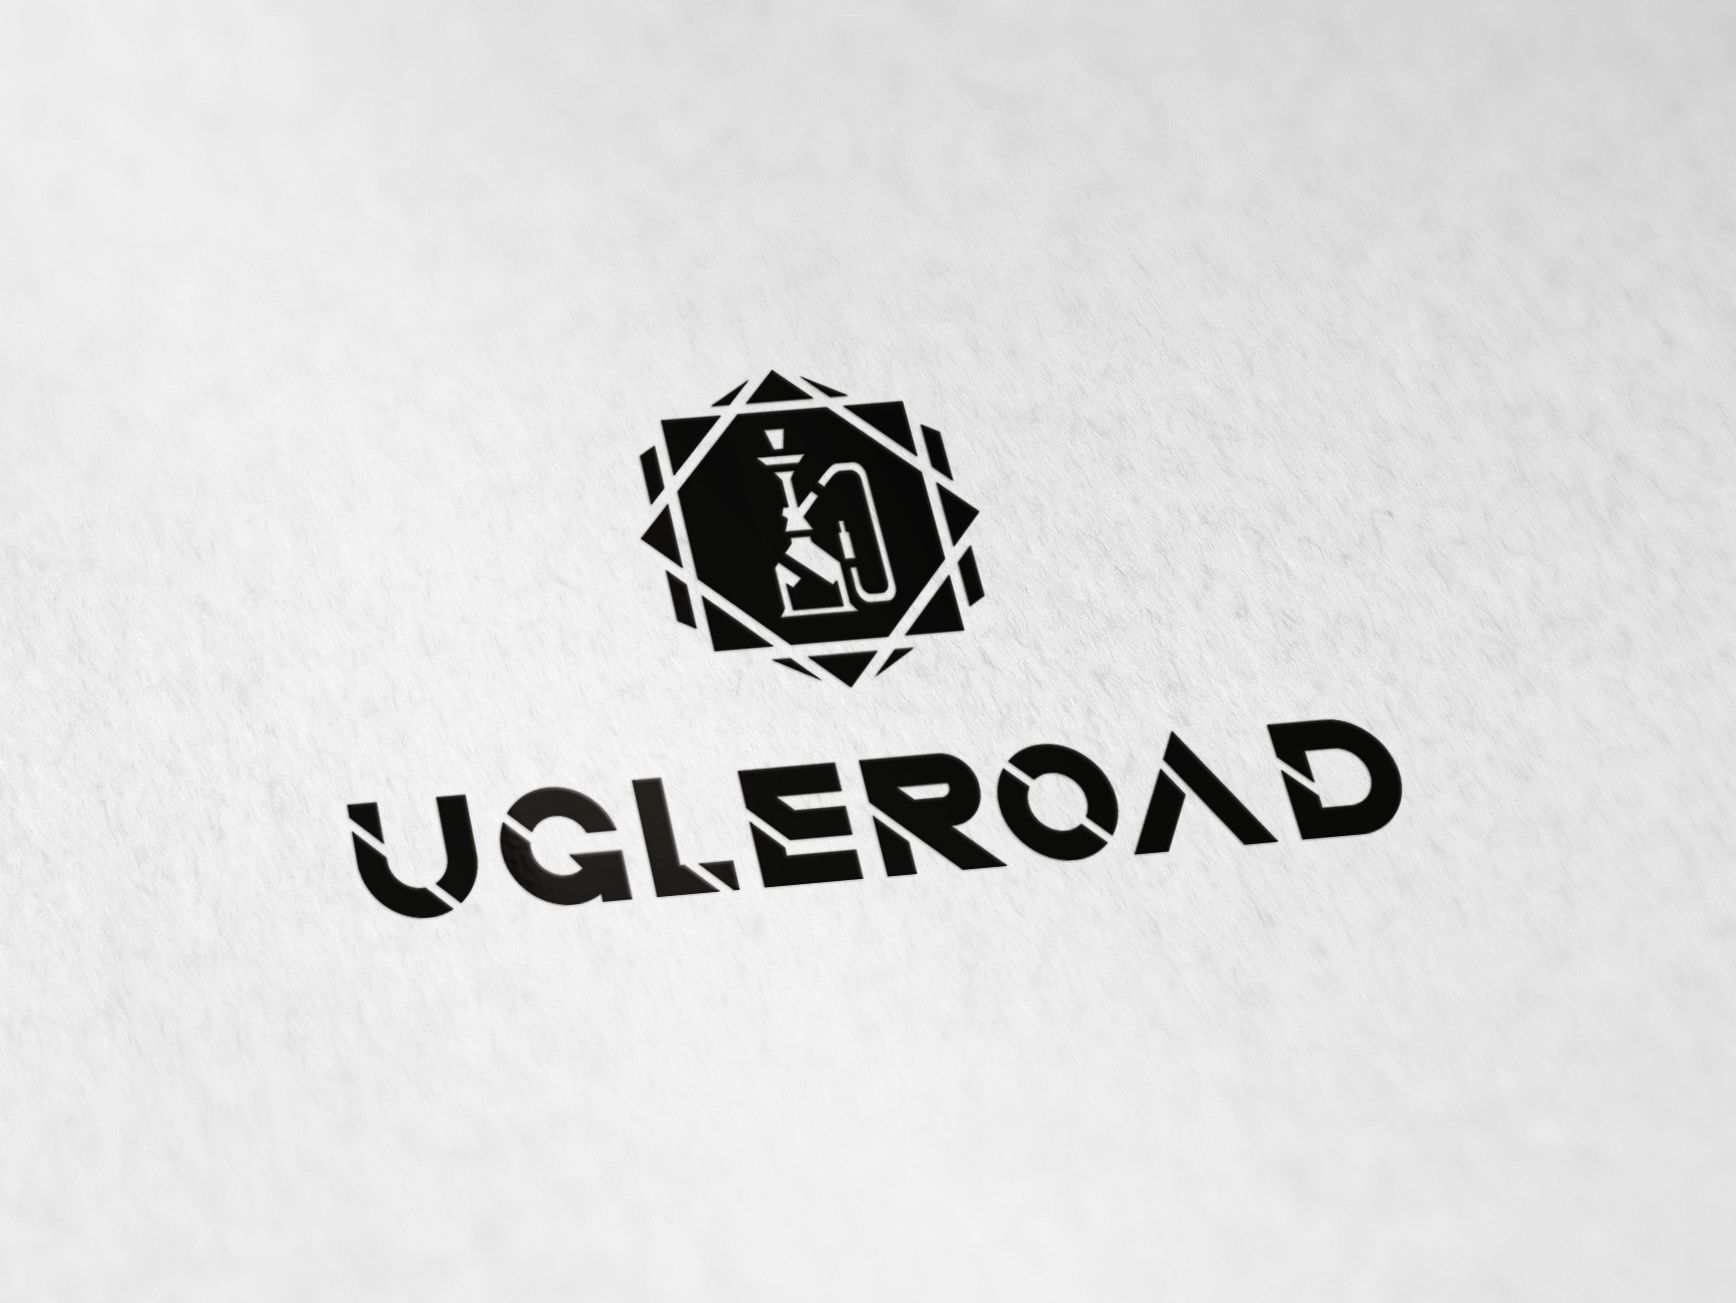 Логотип для UGLEROAD - дизайнер DzeshkevichMary